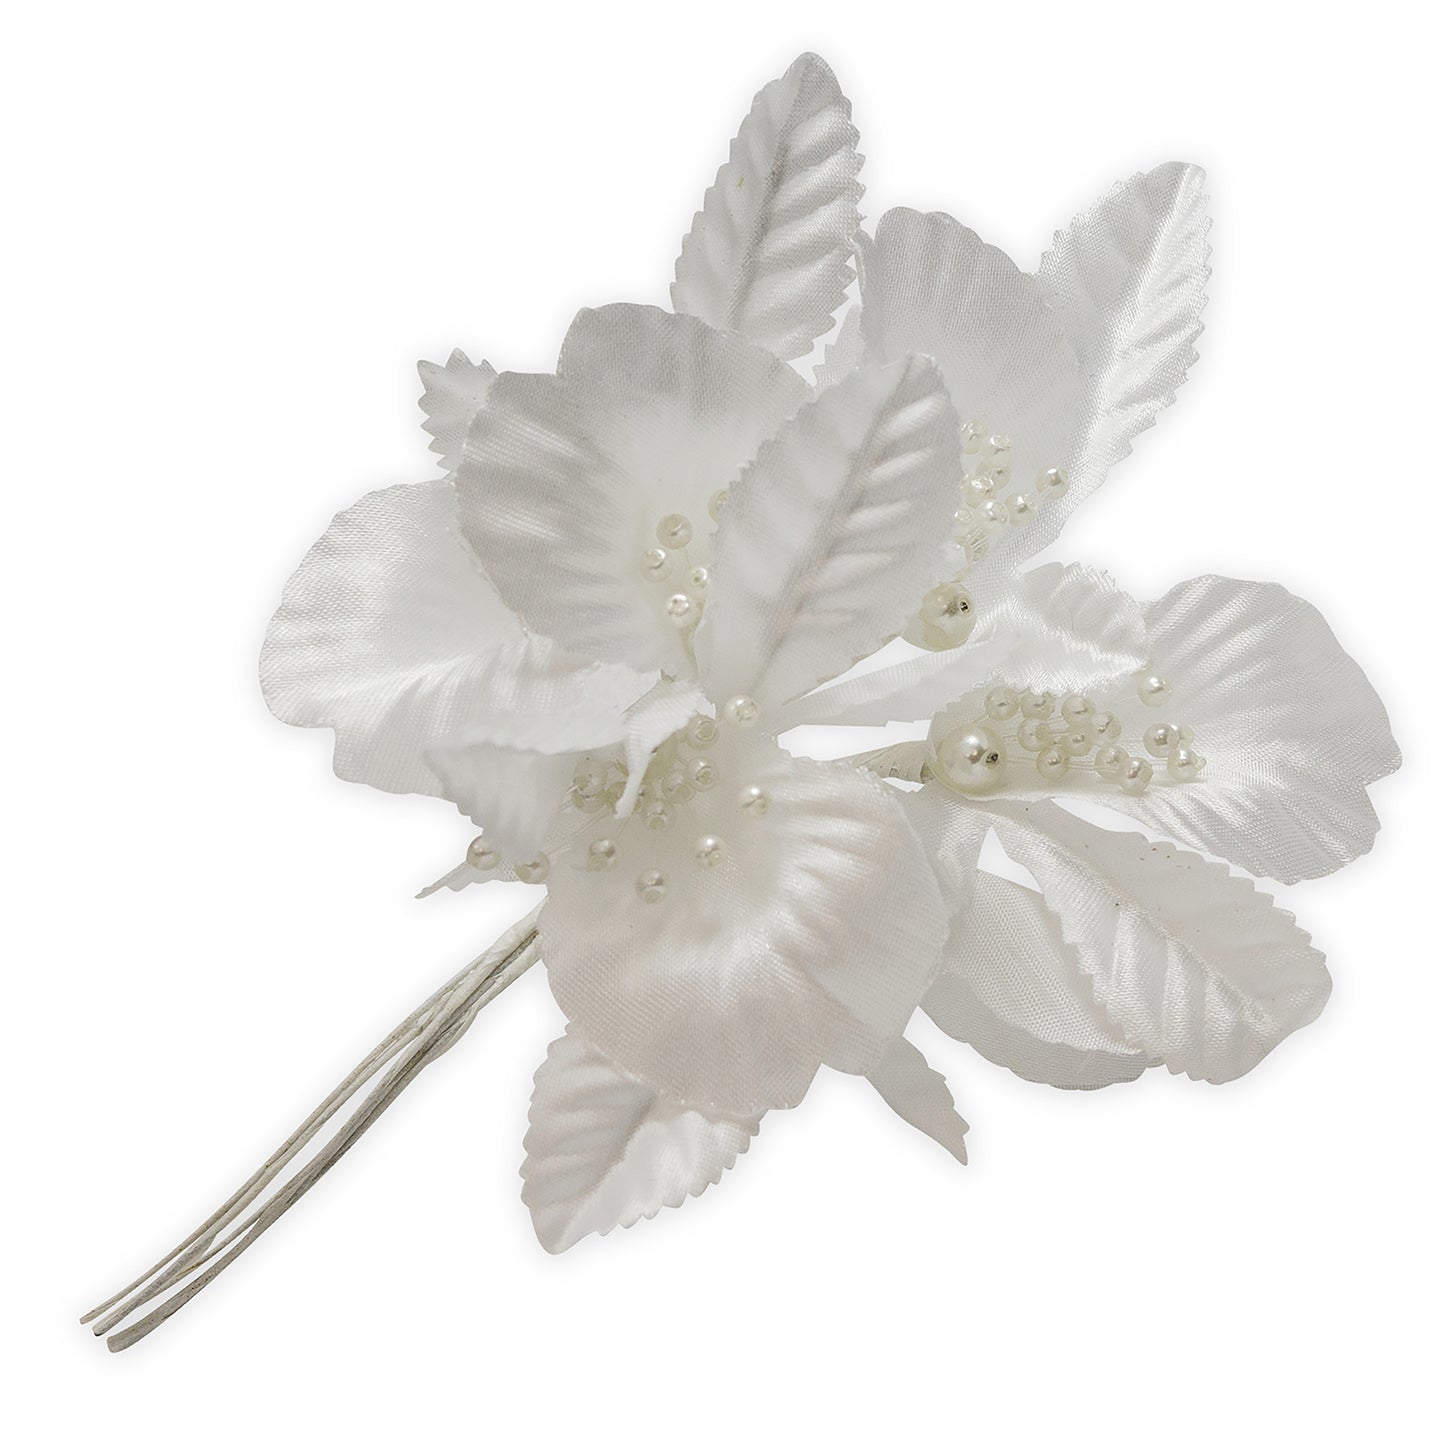 Vintage Bridal Flowers with Pearls Stem  - White